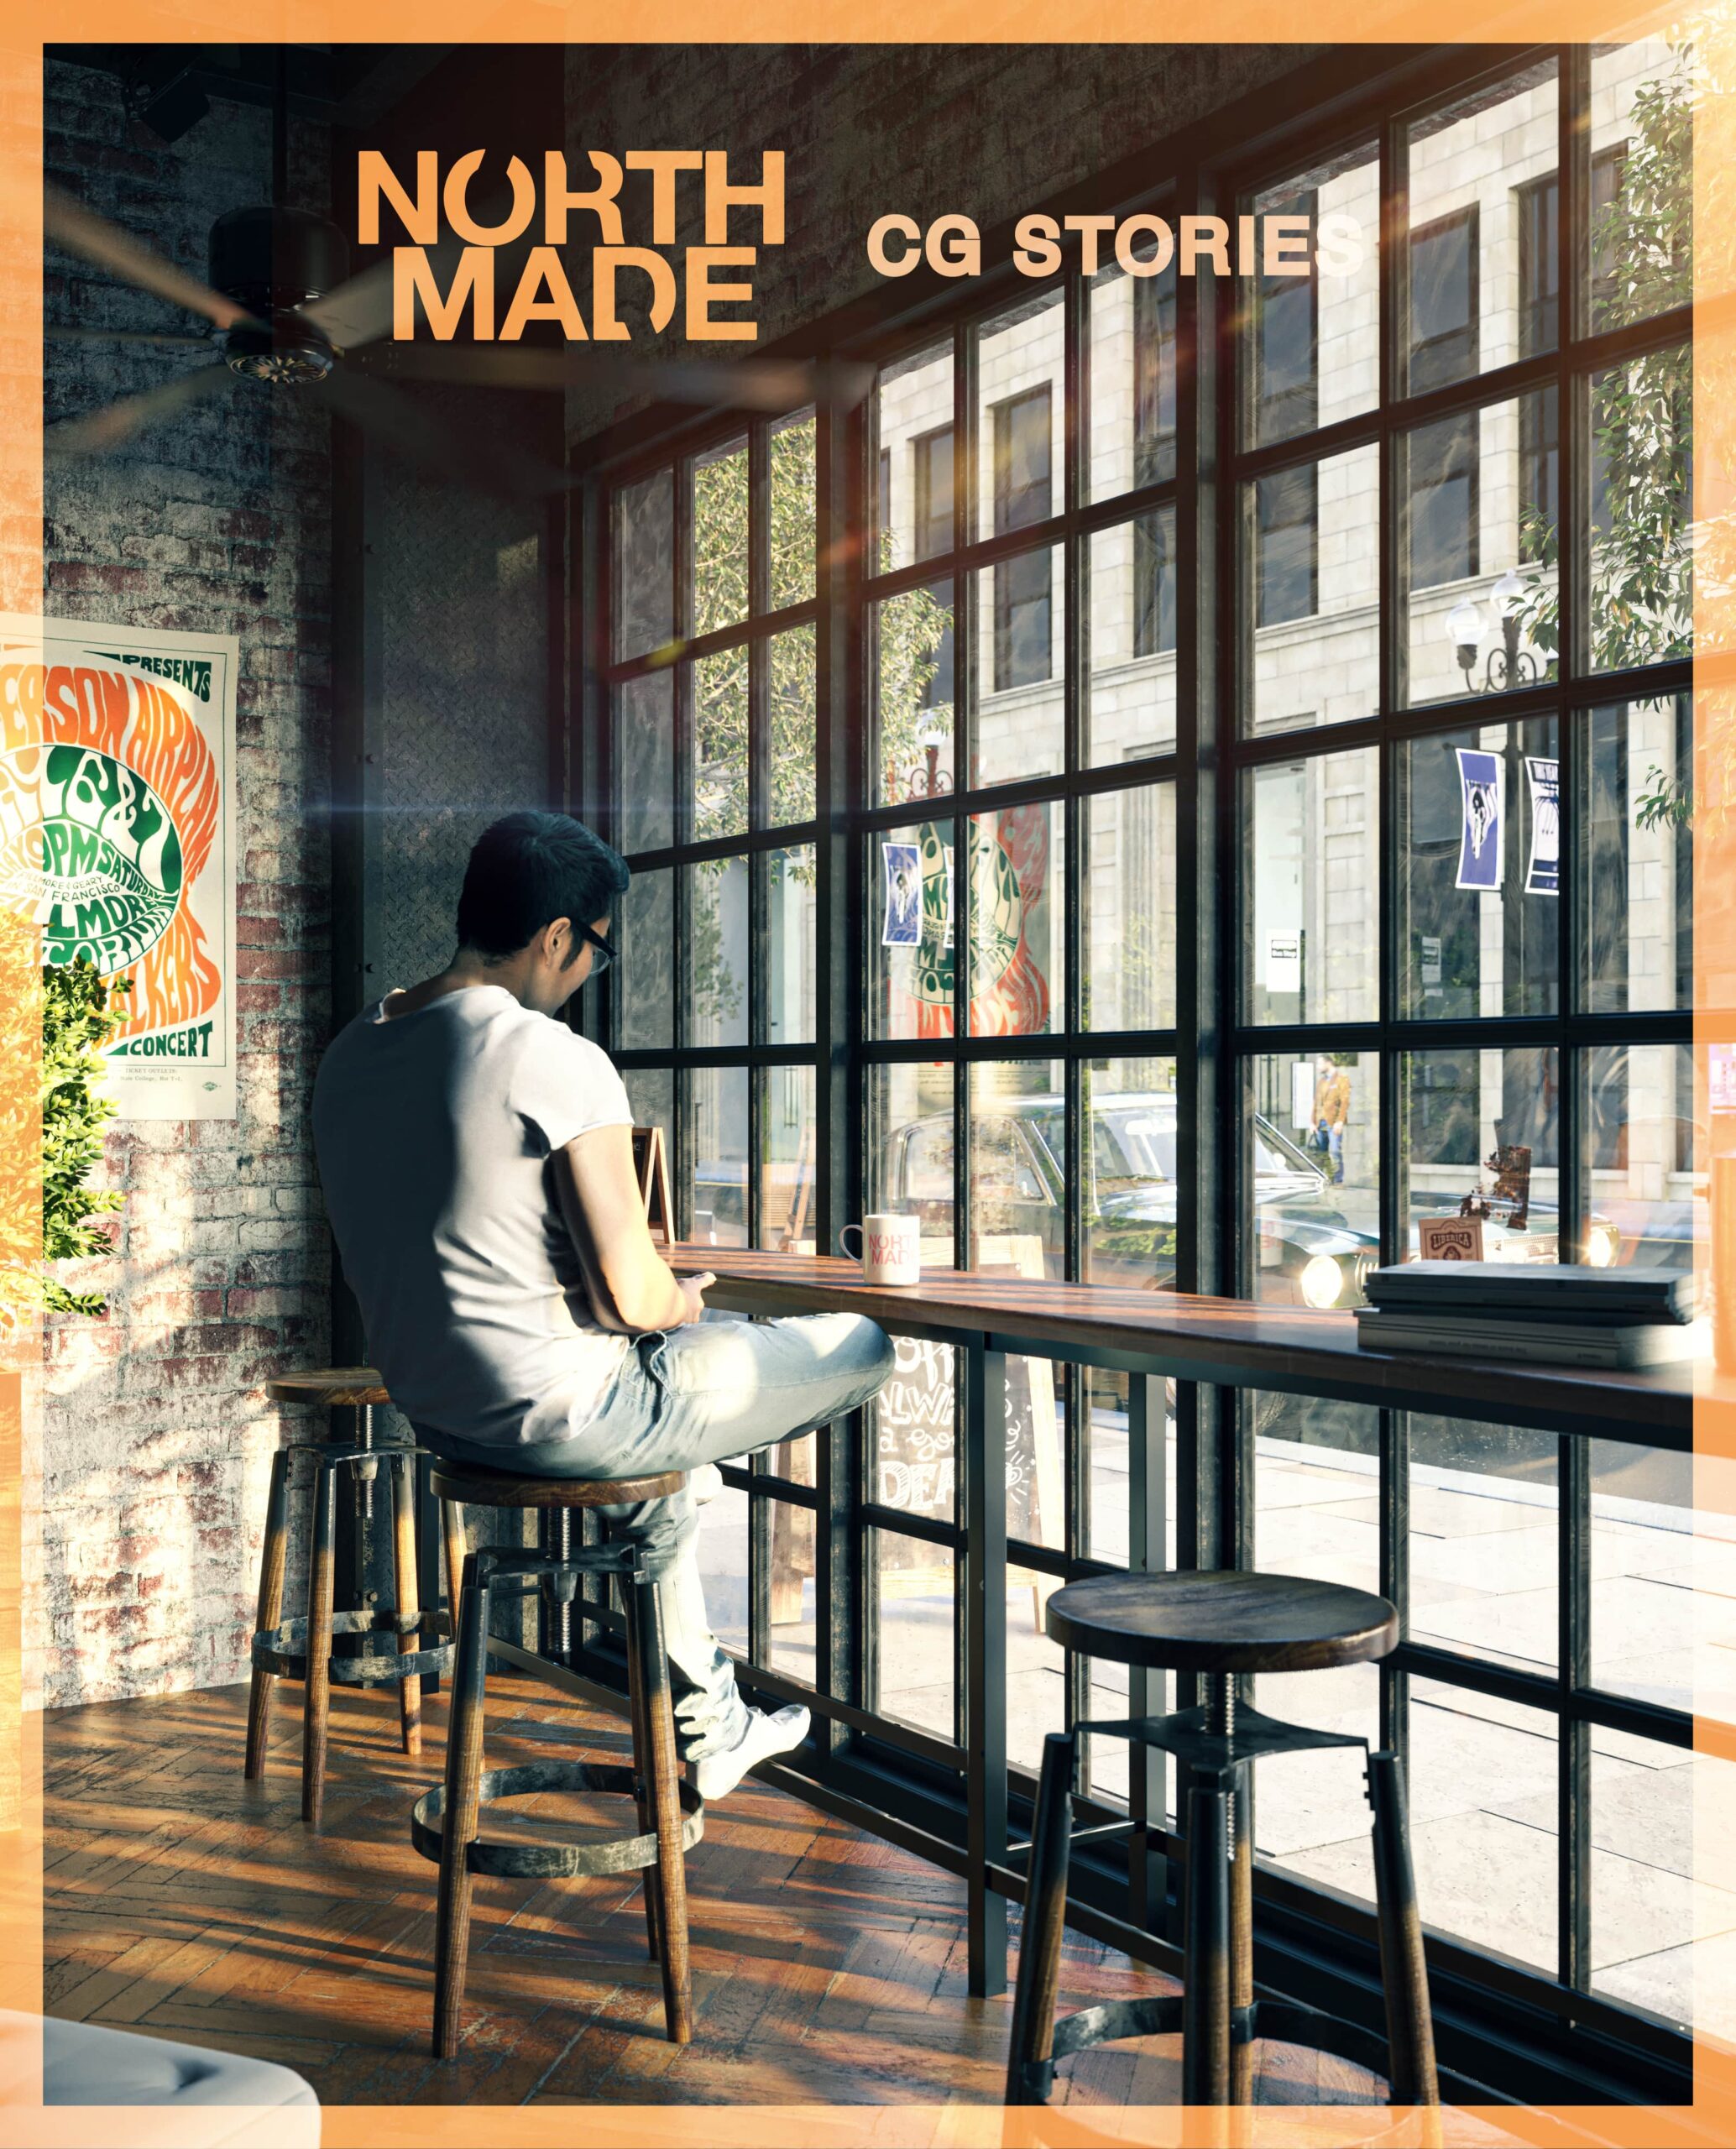 north made studio - cgi stories - cafe copy-min